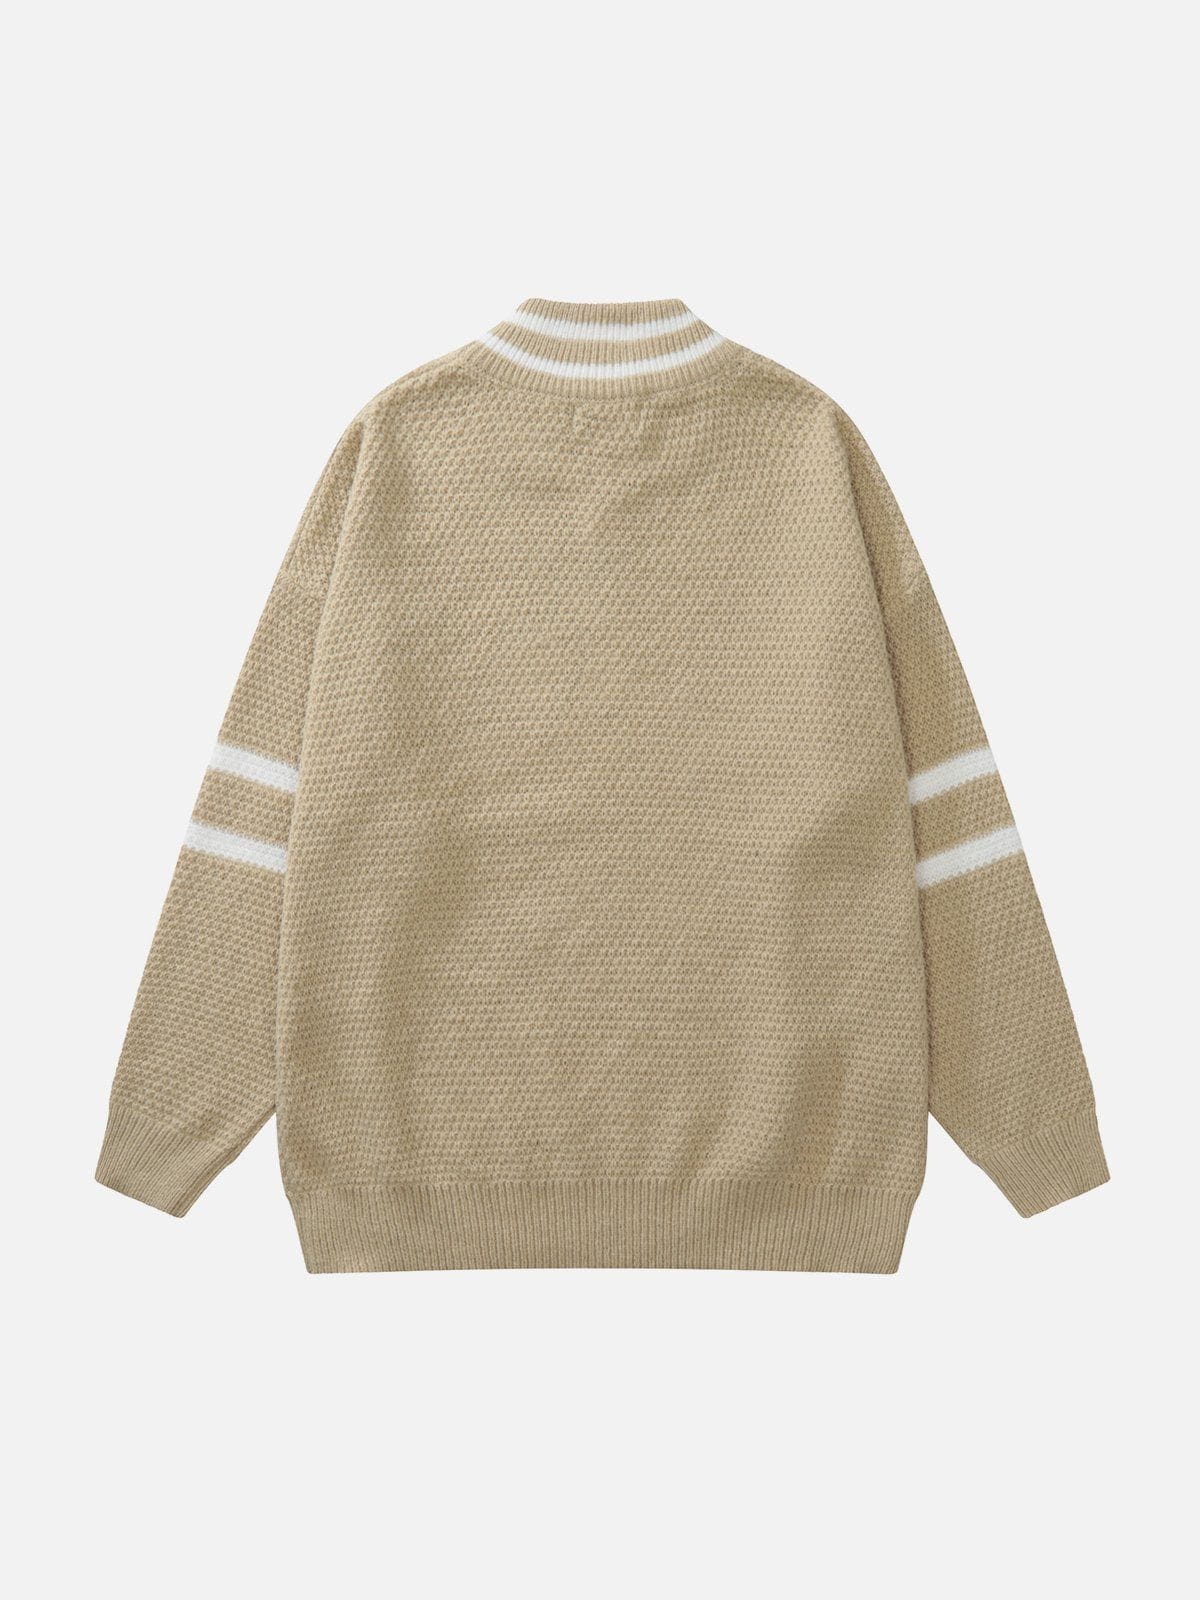 Majesda® - Vintage Half-Zip Sweater outfit ideas streetwear fashion